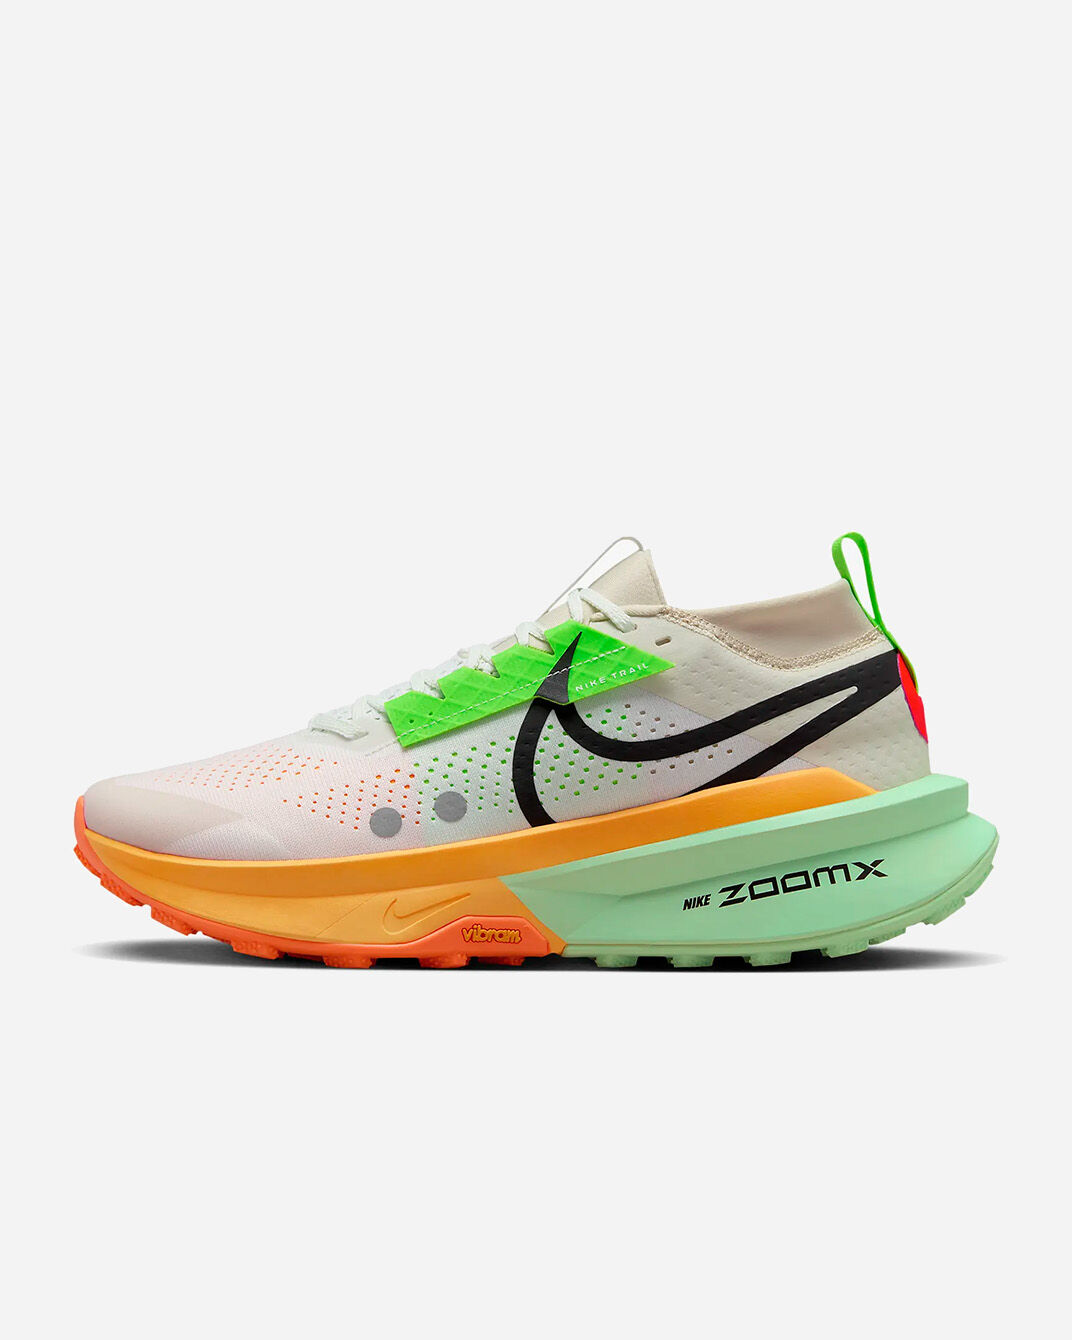 Nike Chaussures de Running Zegama Trail 2 pour Homme Couleur : Summit White/Black-Laser Orange Taille : 44 EU   10 US 10